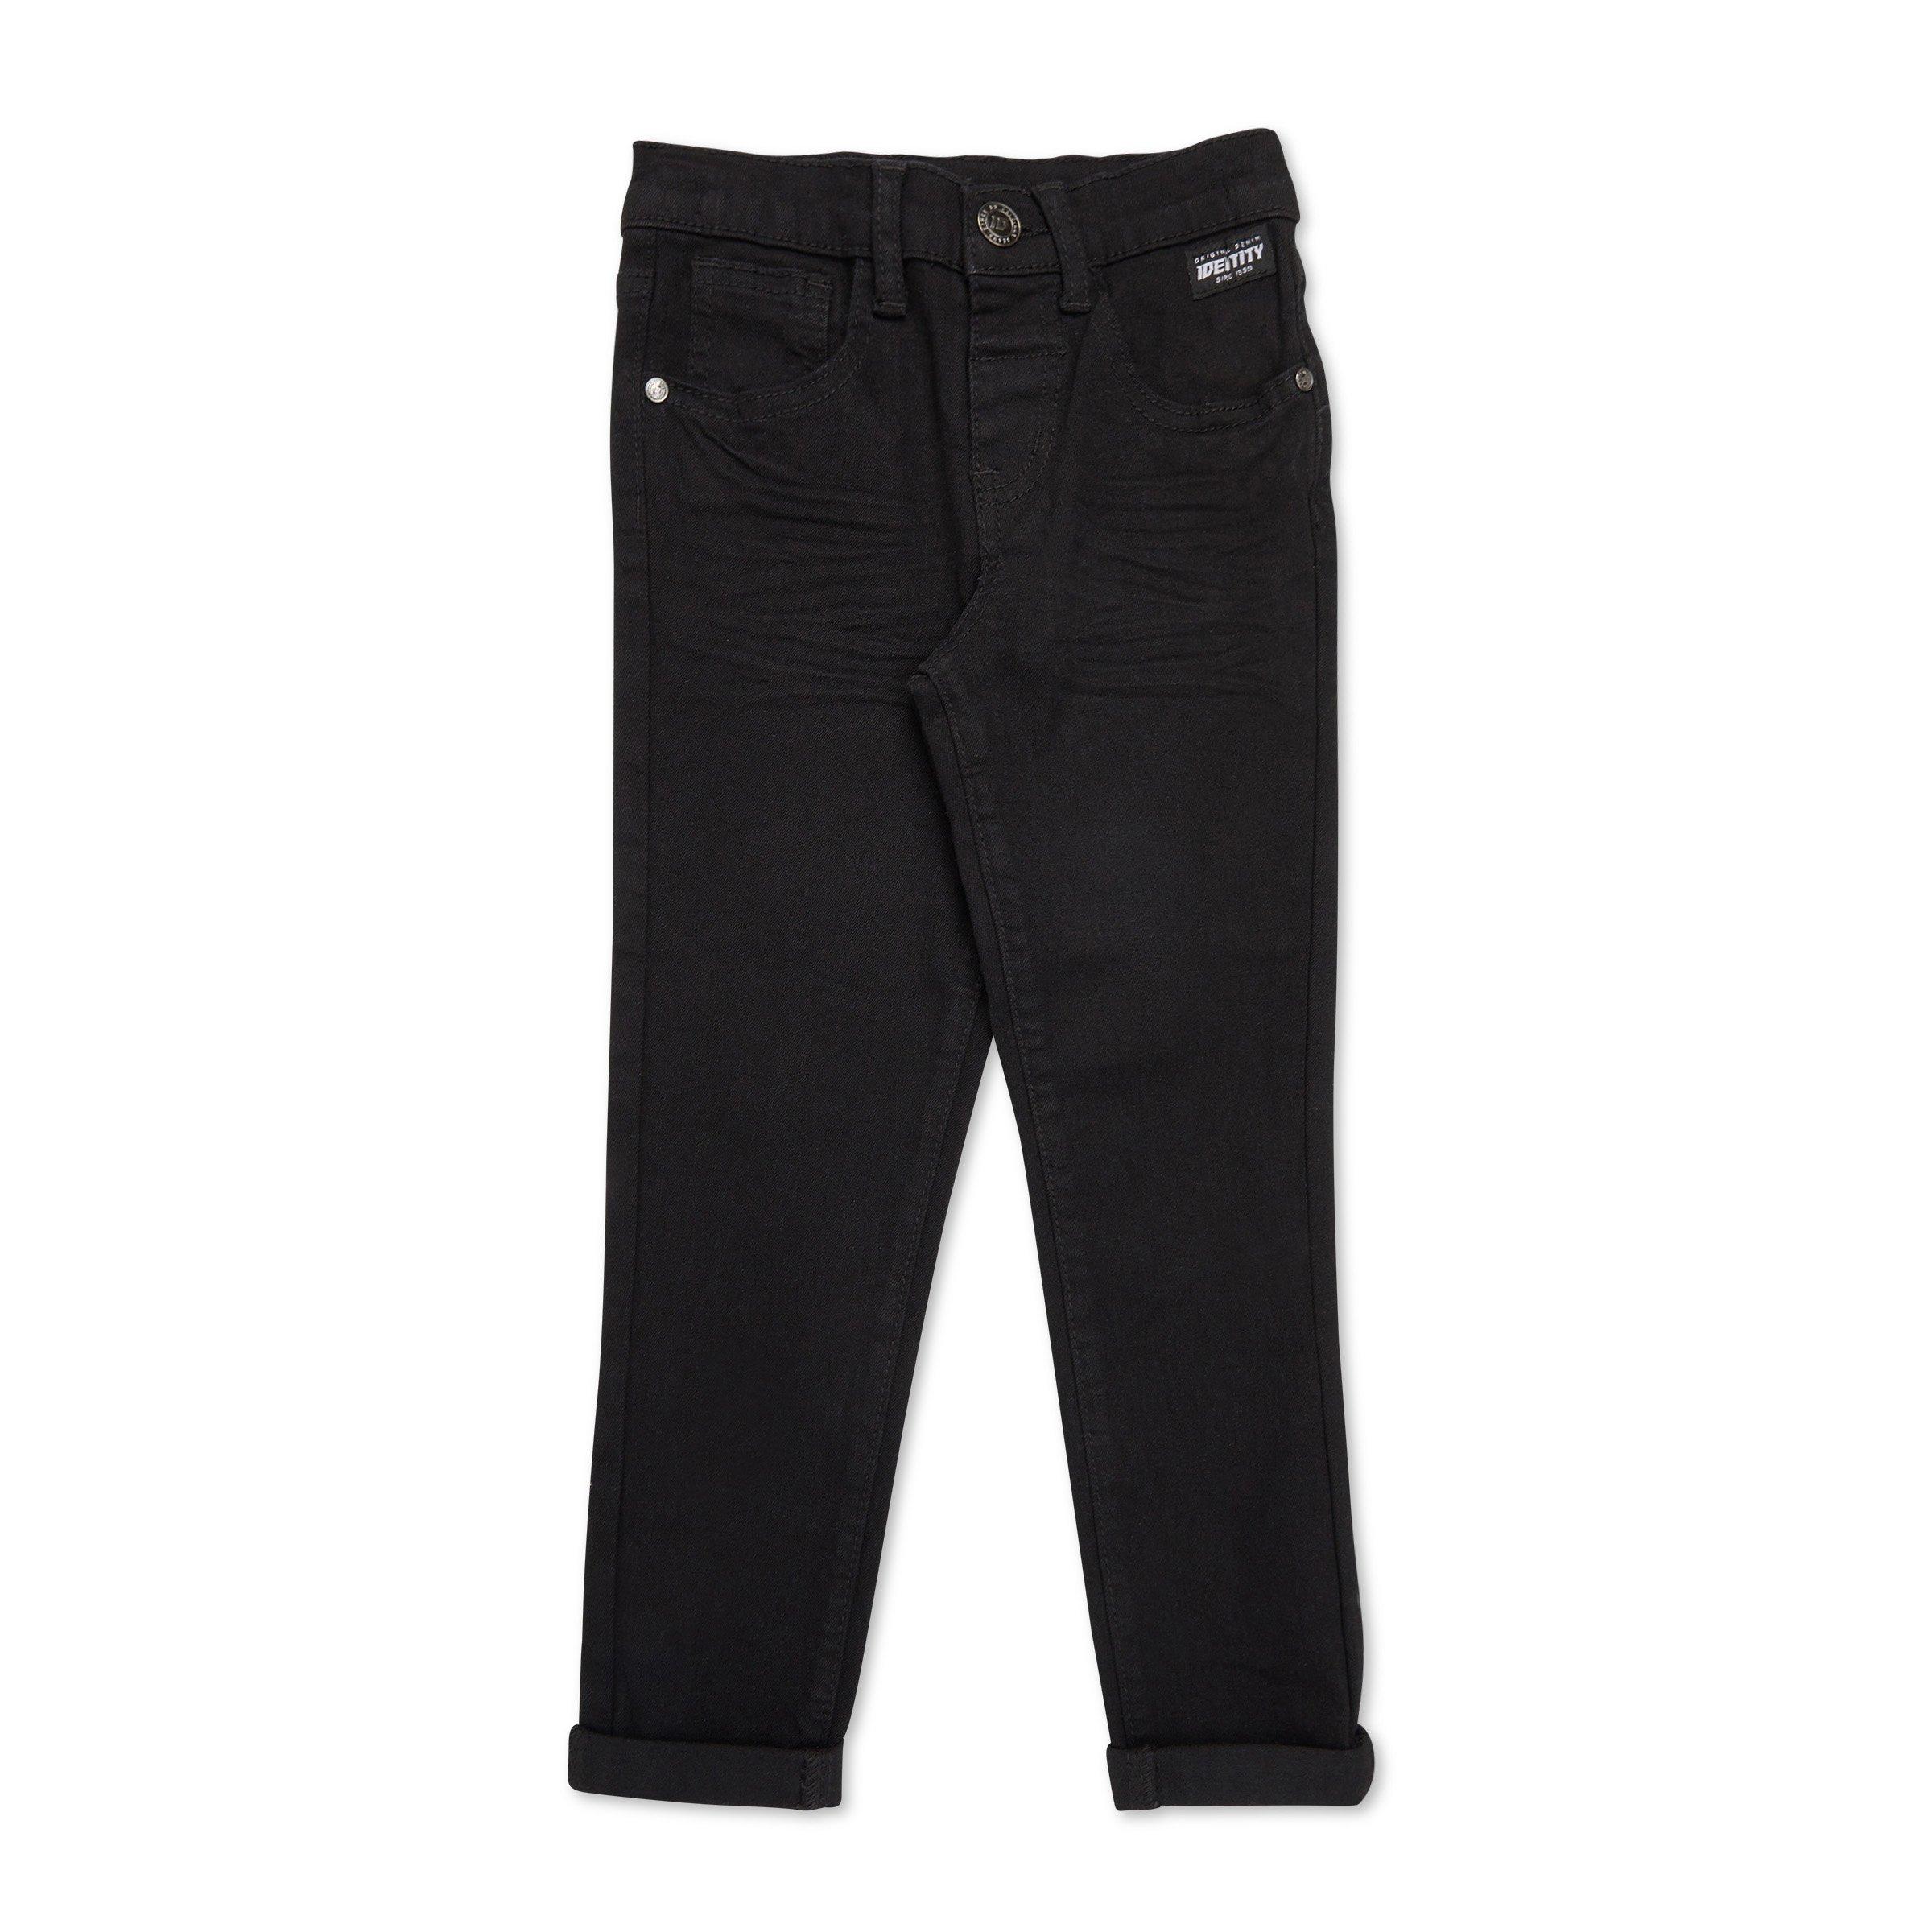 No Boundaries Kids Opp Skinny Jeans Black Dark Wash Stretch Pockets Denim 9  New